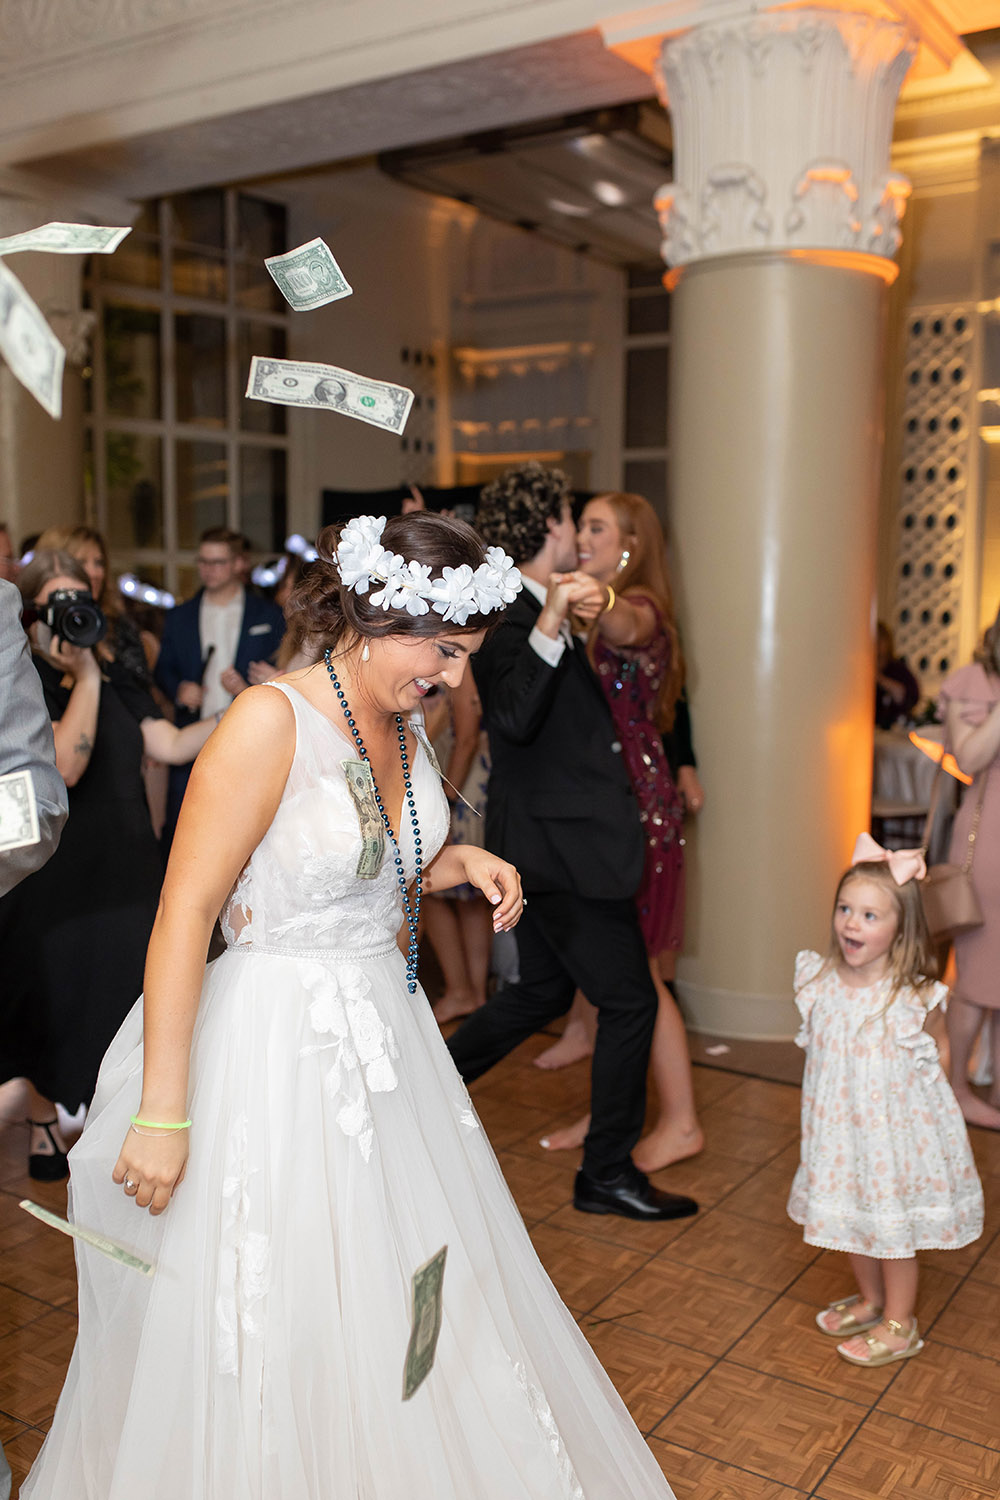 money dance at wedding